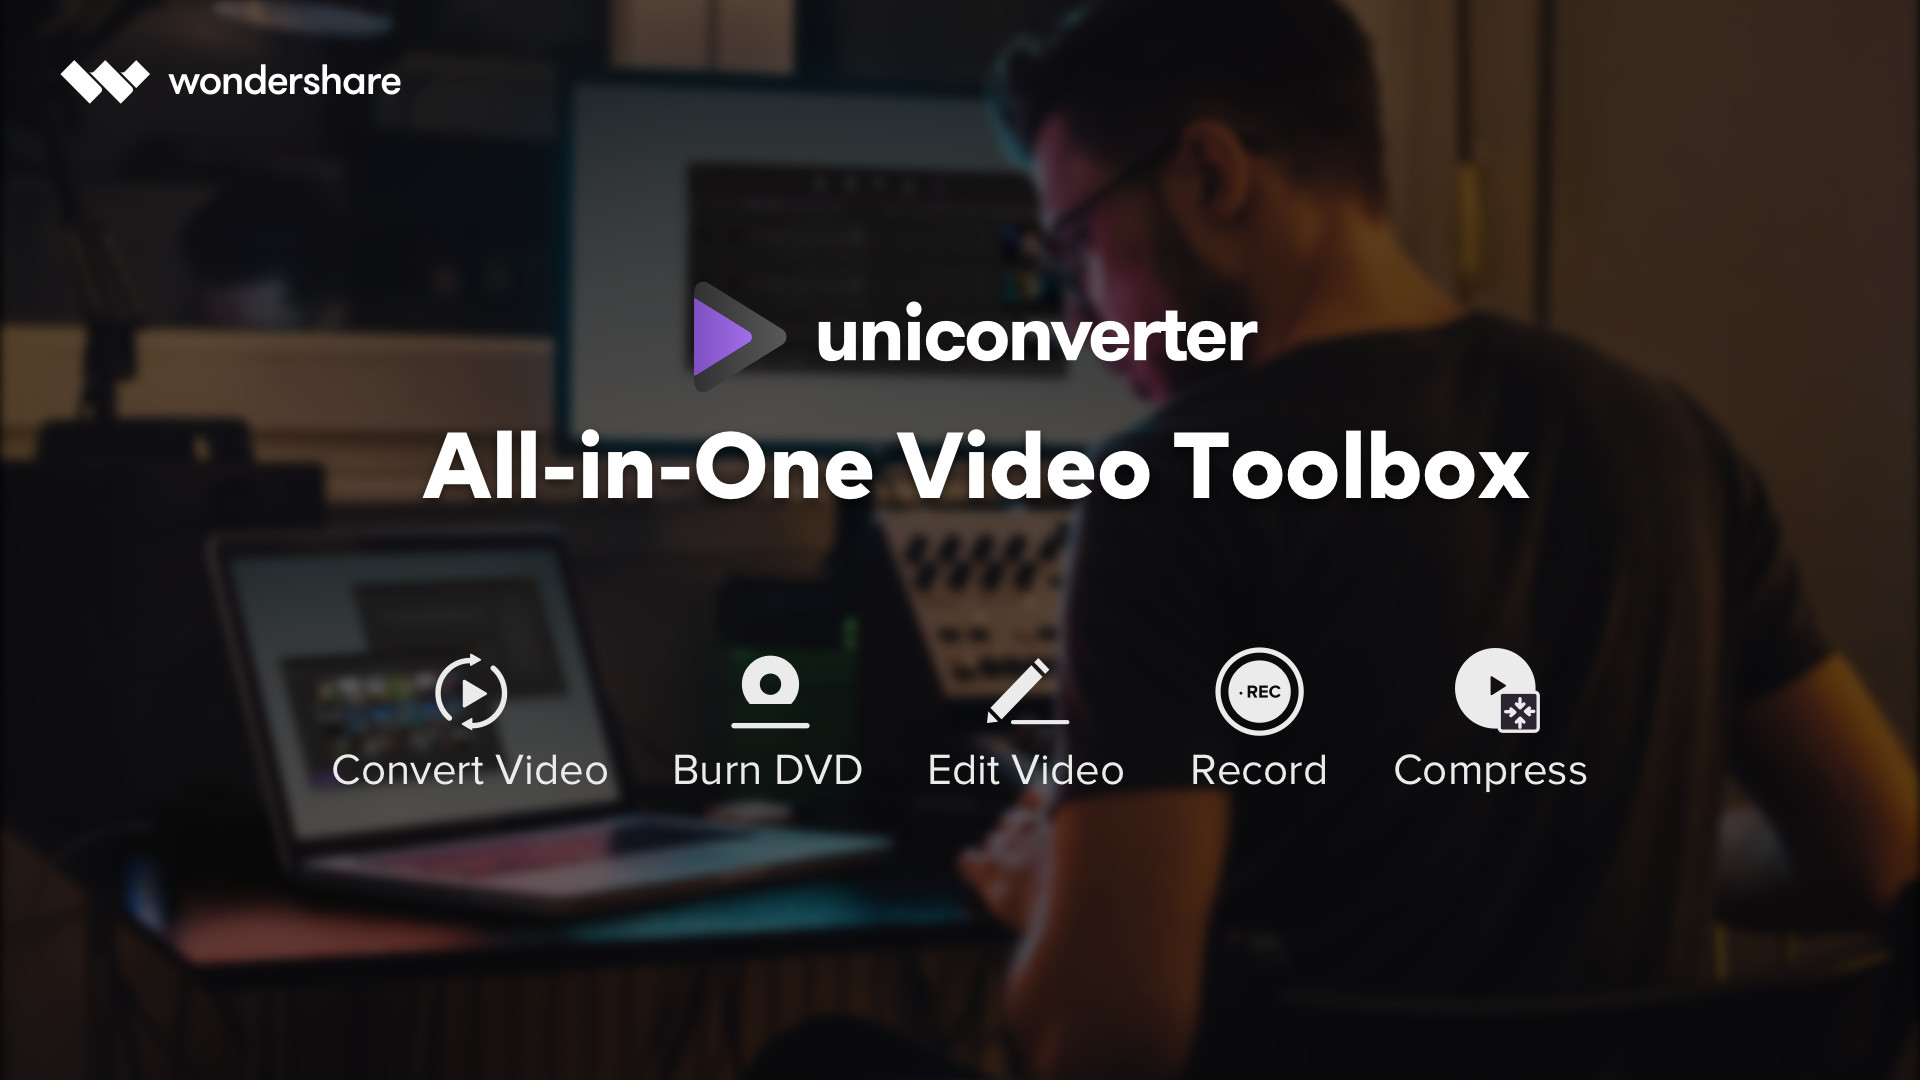 Wondershare UniConverter 15.0.1.5 instal the last version for iphone